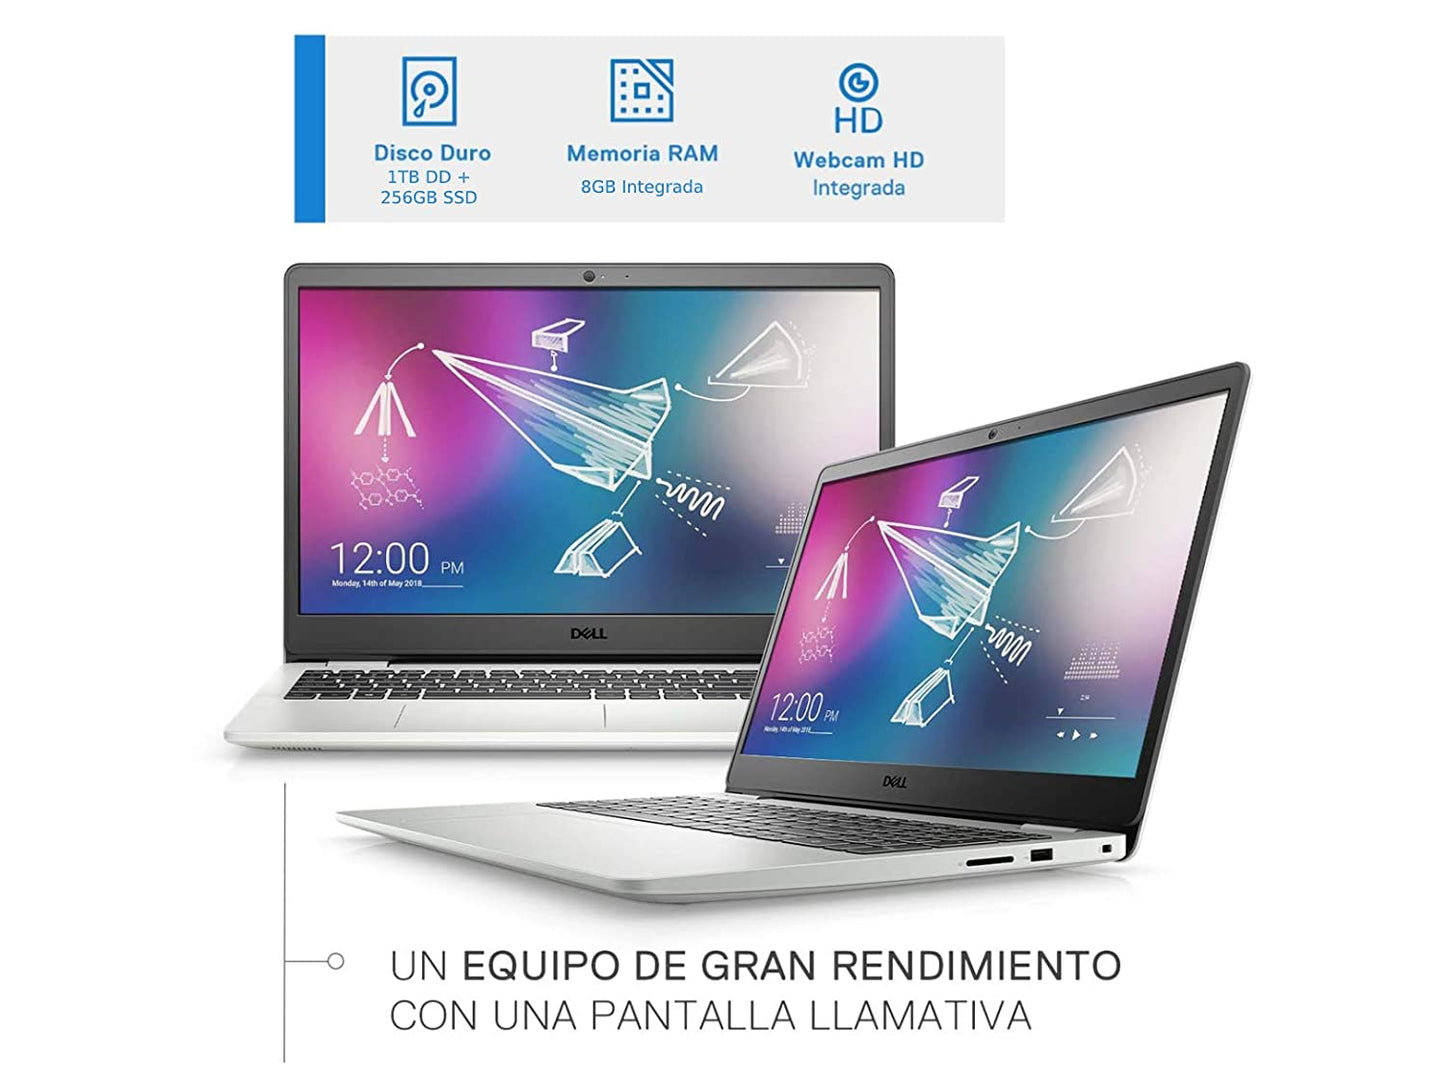 Dell Inspiron 3501 15-inch FHD Laptop (11th Gen i5-1135G7/8GB/1TB HDD/256GB SSD/Win 10 + MS Office/2GB Graphics/Soft Mint)